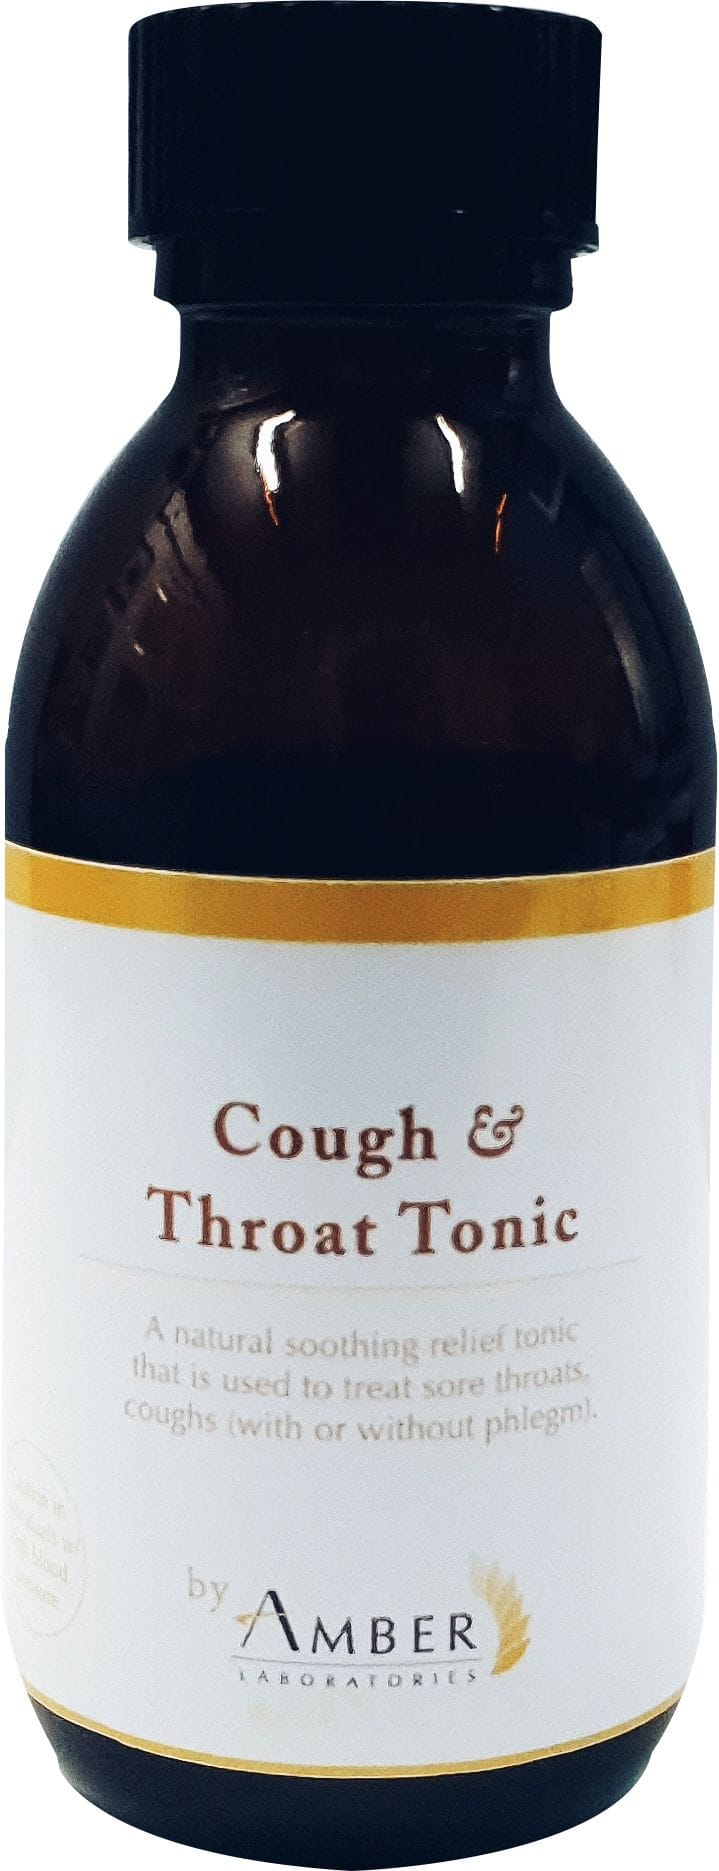 Cough & Throat Tonic